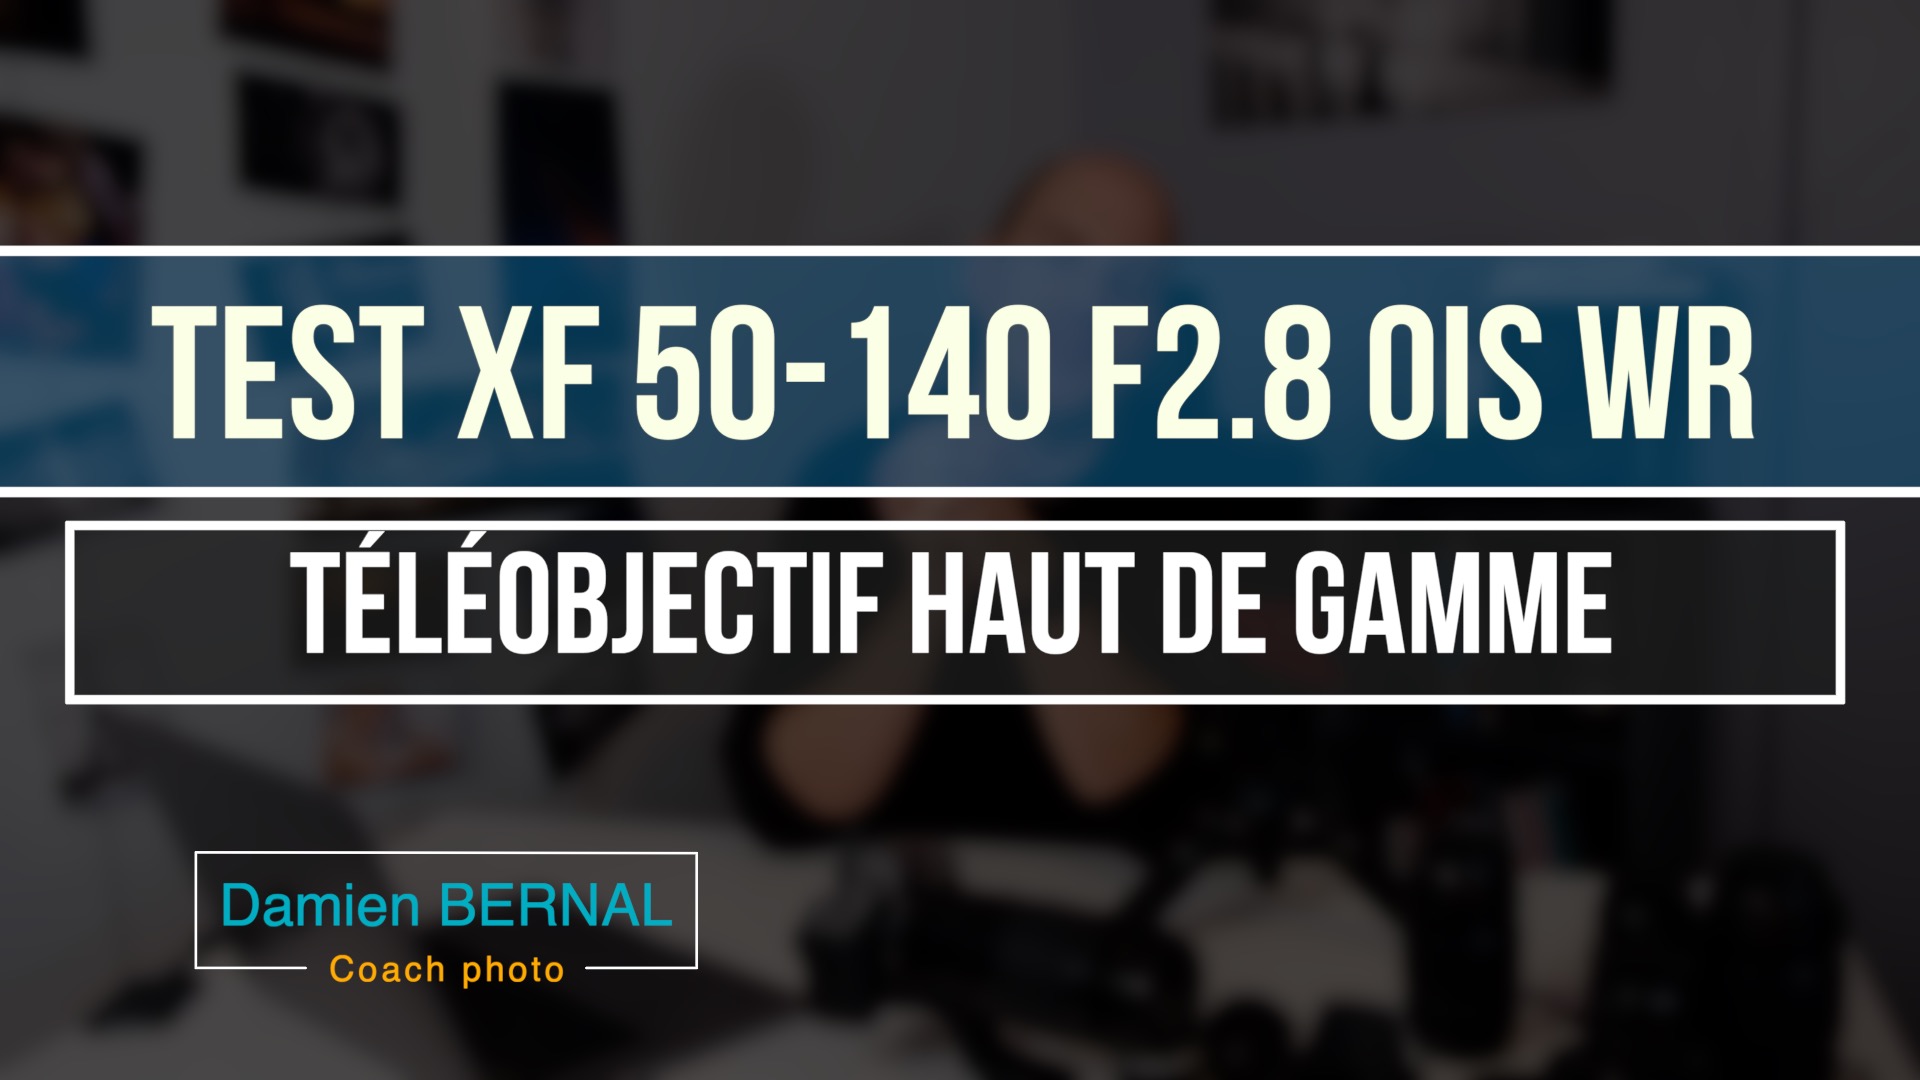 Test XF50-140 2.8